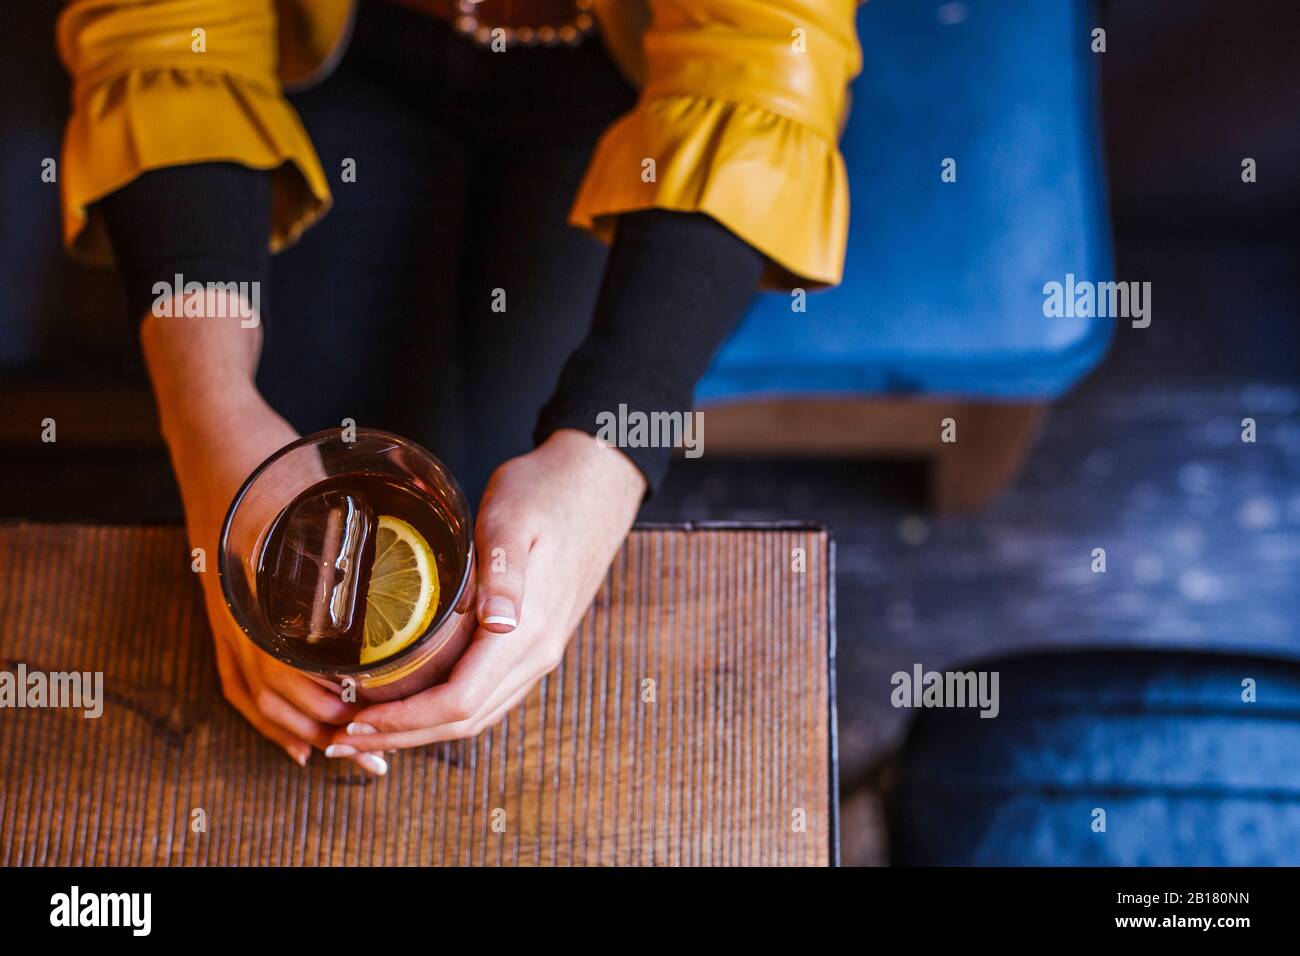 https://c8.alamy.com/comp/2B180NN/womans-hands-holding-glass-of-ice-cooled-beverage-2B180NN.jpg